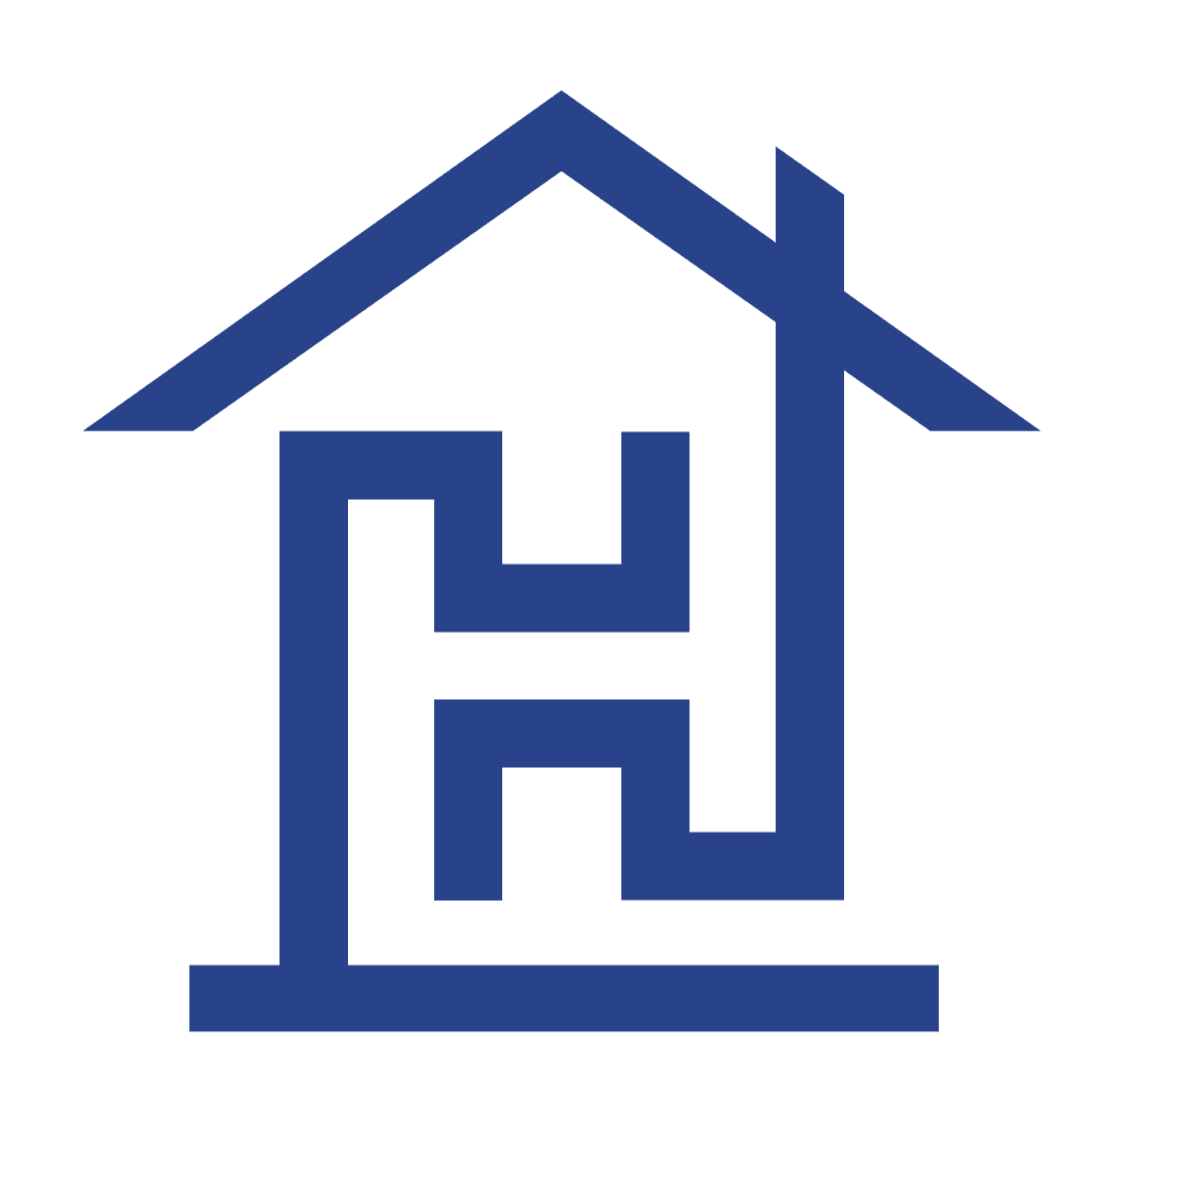 corporate-logo